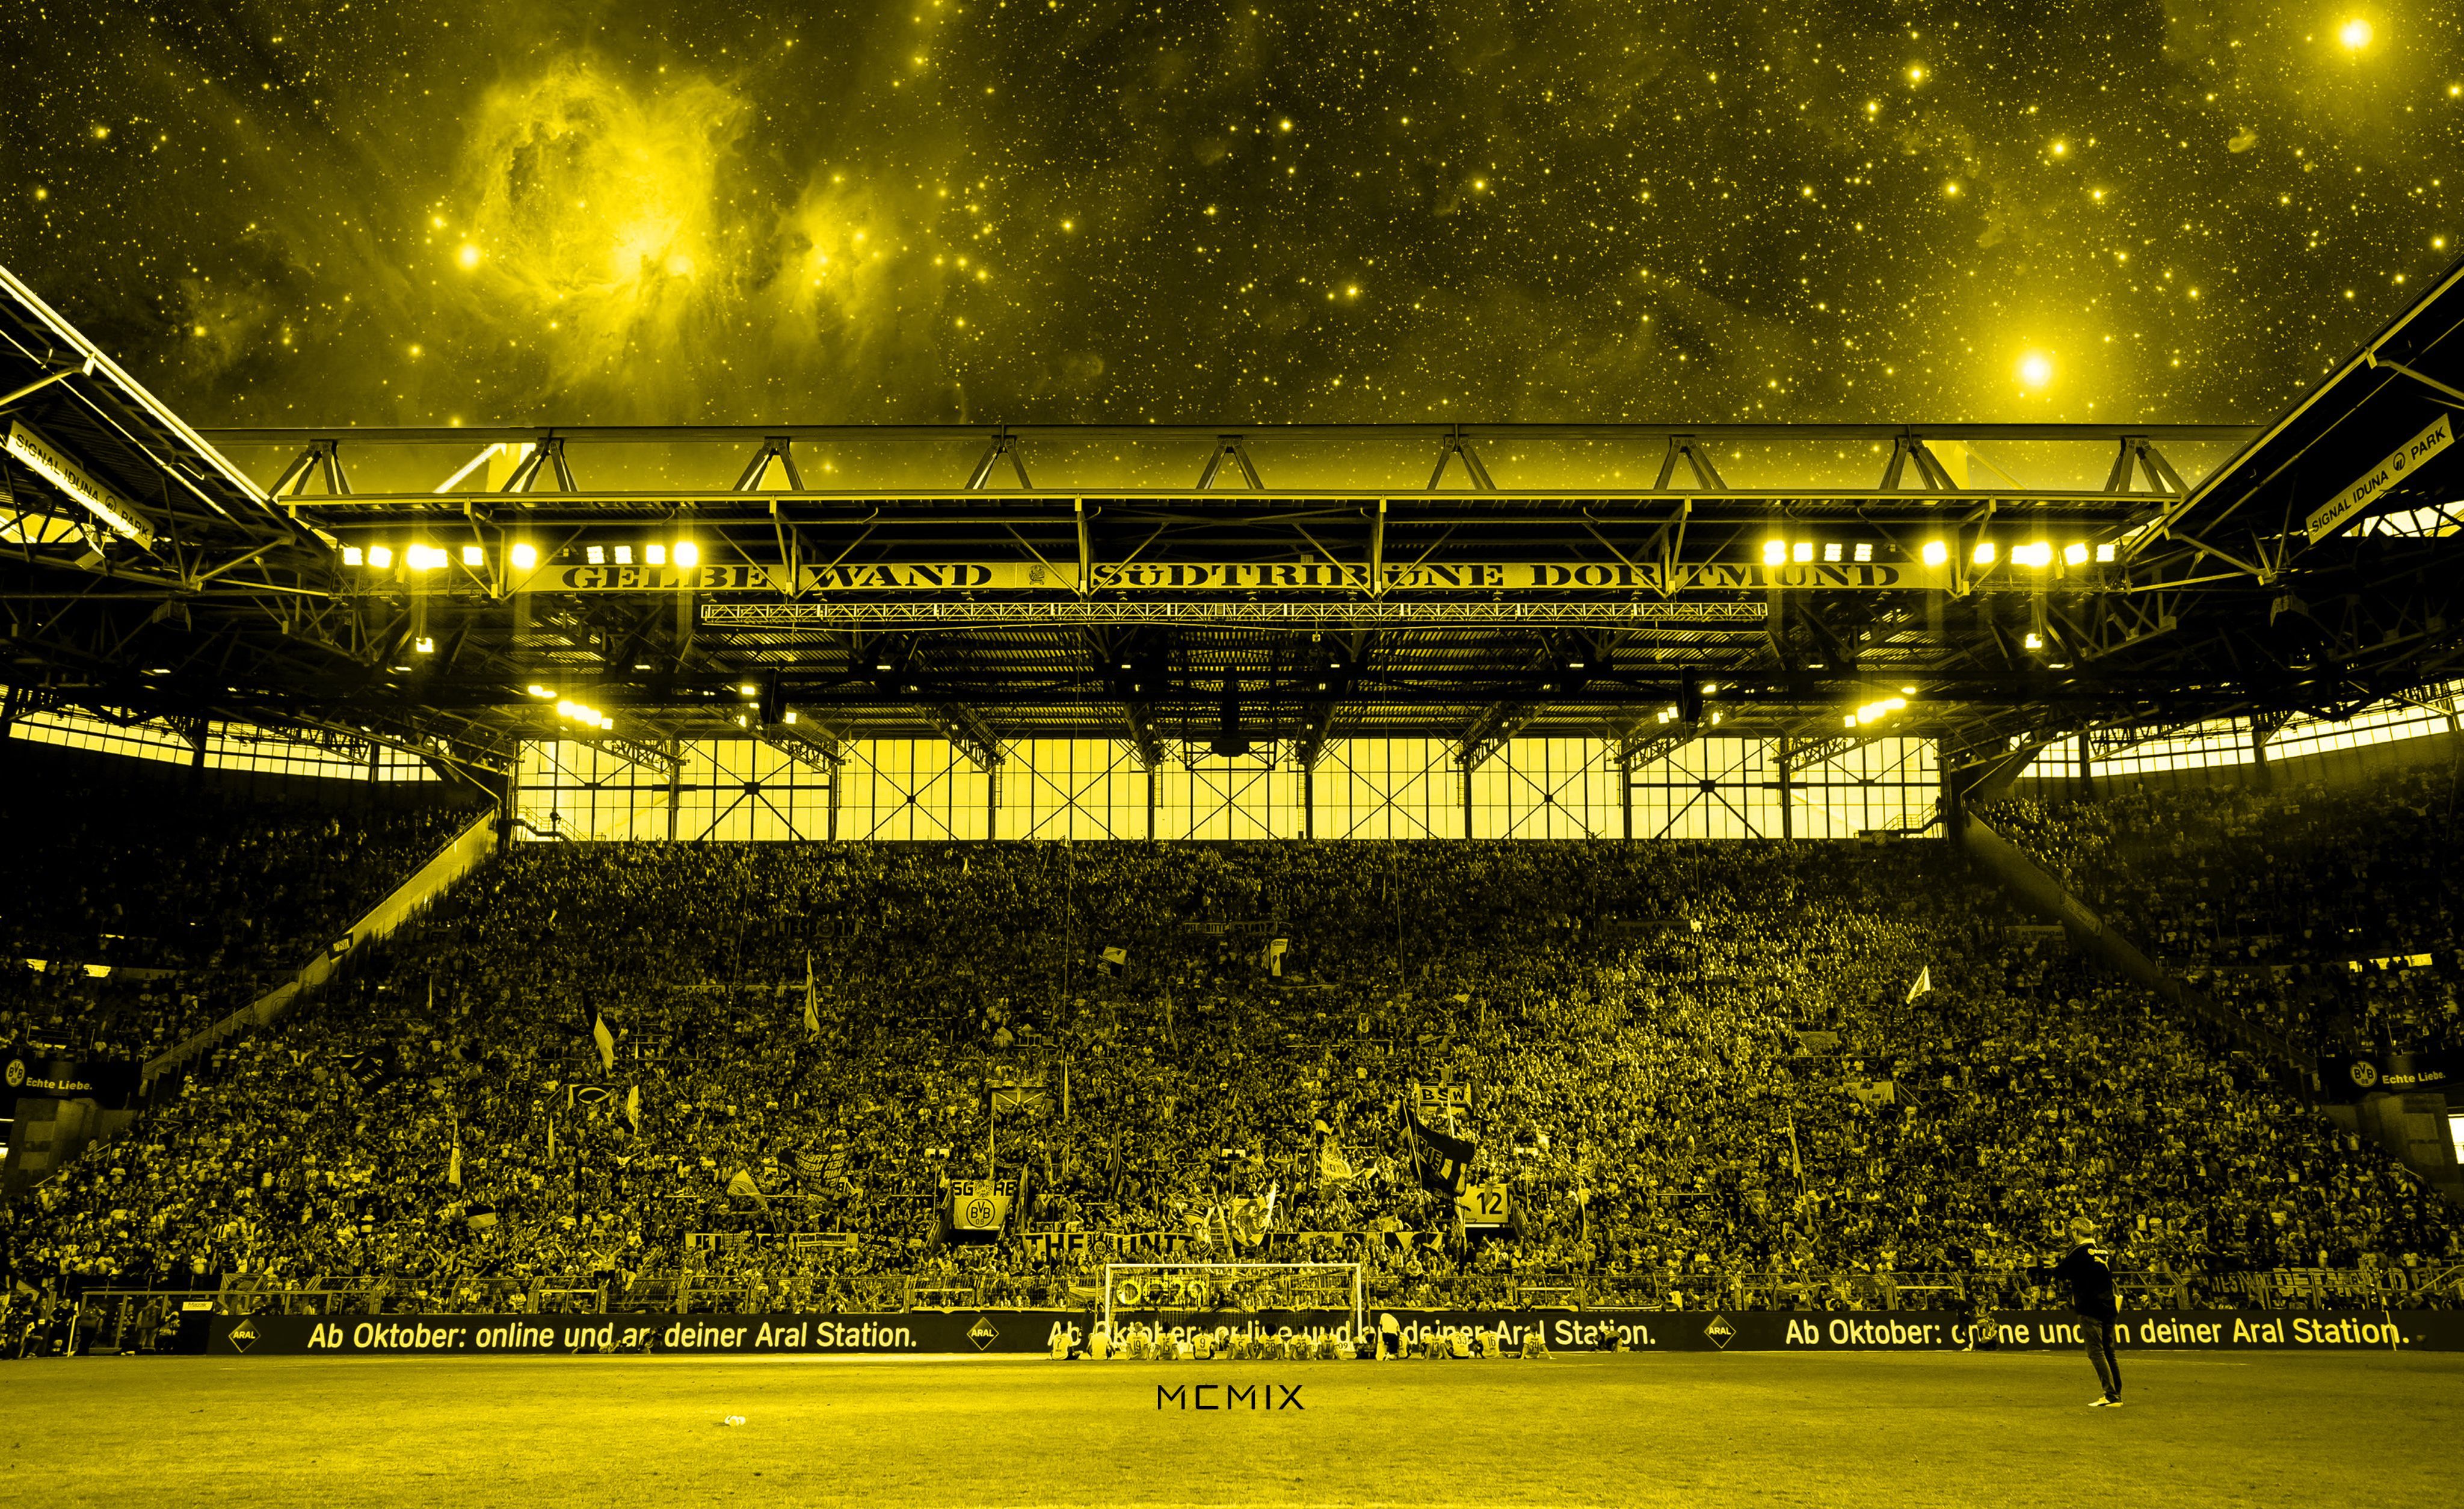 Borussia Dortmund Hintergrundbild 4096x2509. BVB Dortmund Desktop Wallpaper. Borussia dortmund wallpaper, Borussia dortmund, Bvb dortmund